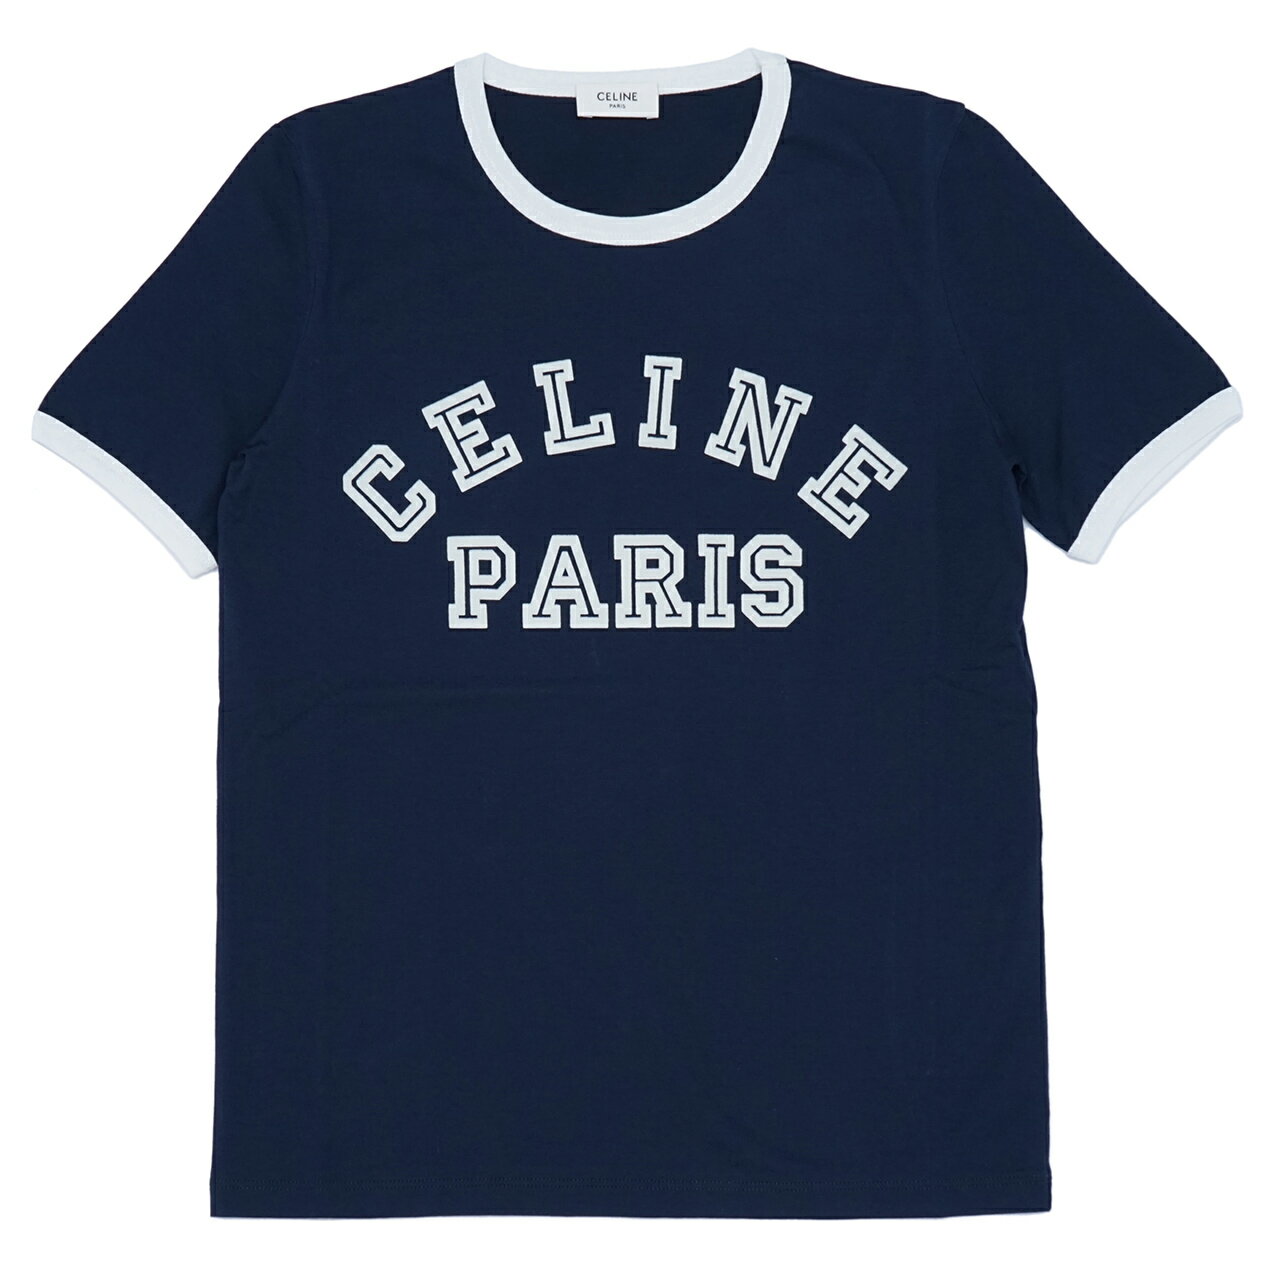 CELINE セリーヌ CELINE PARIS 70 039 S Tシャツ コットンジャージー 2X779671Q.07OW メンズ レディース ユニセックス 半そで お洒落 ロゴ